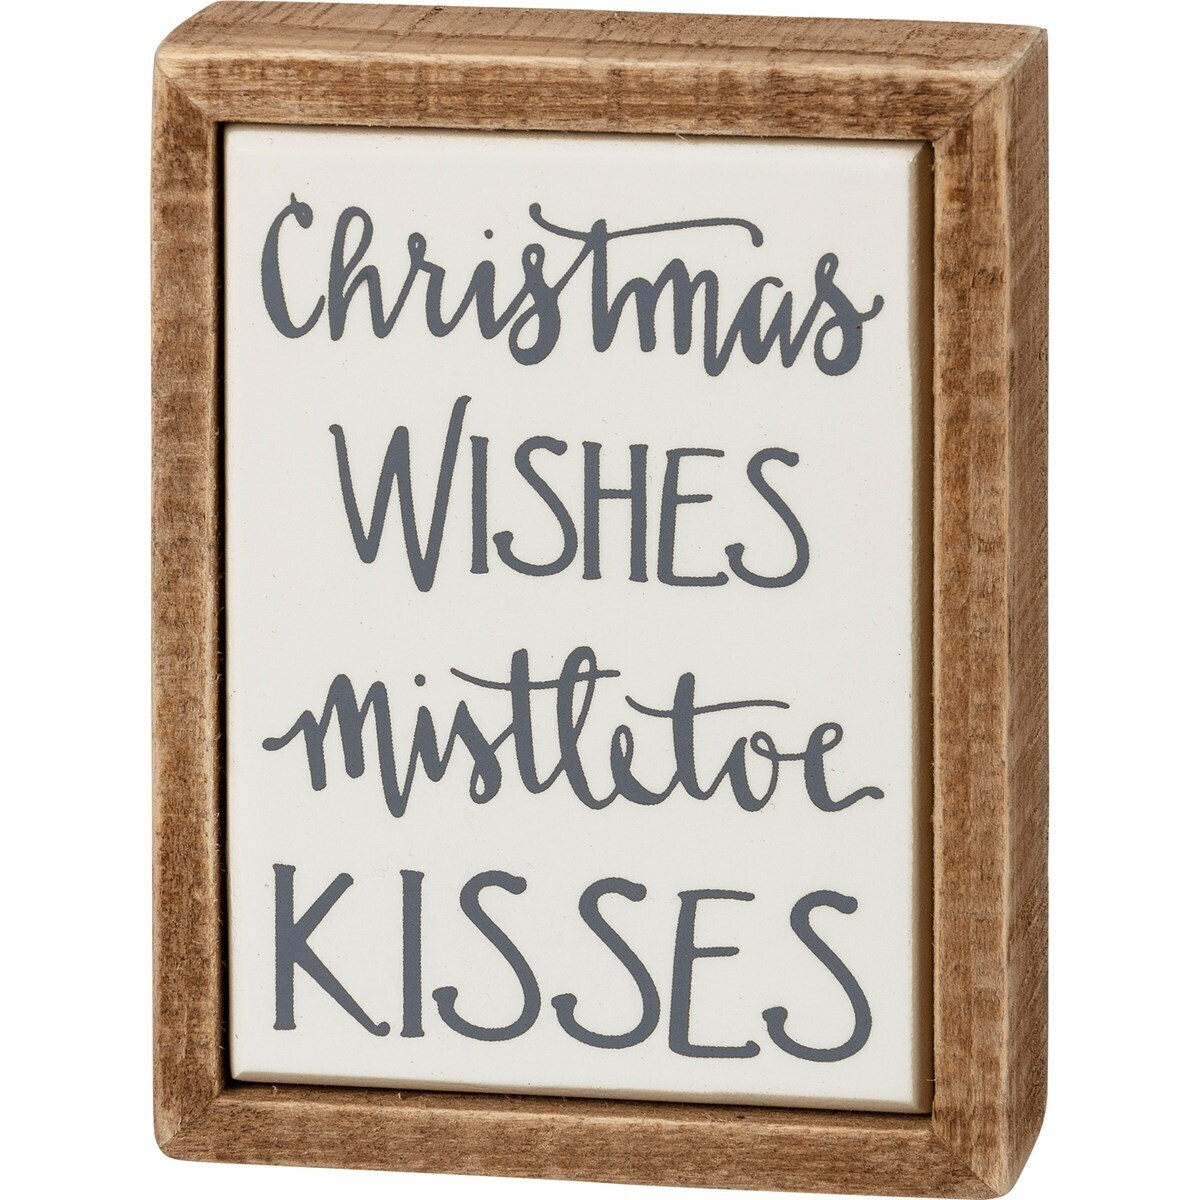 Christmas Wishes Mini Box Sign